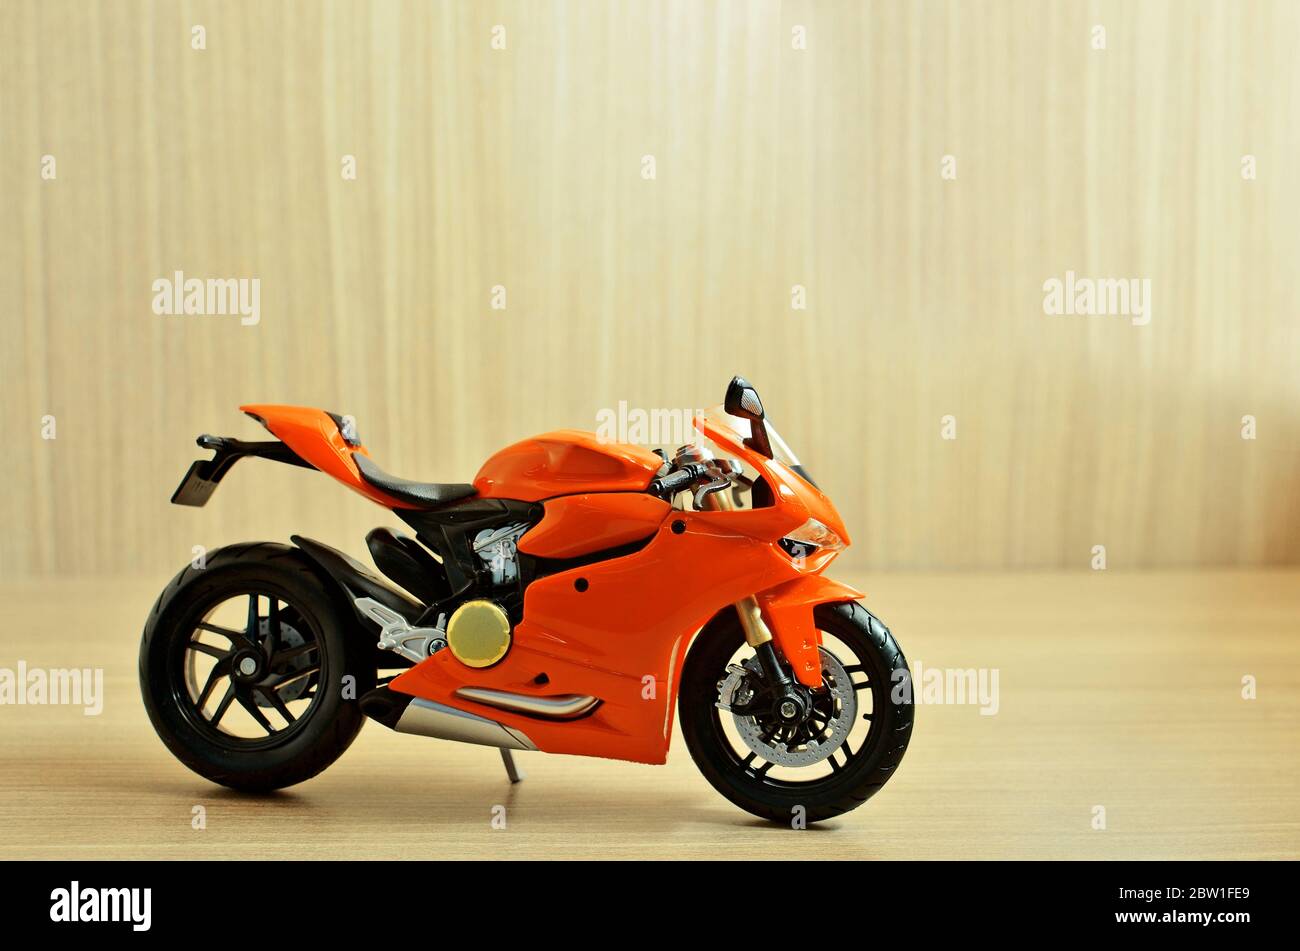 Orange motorcycle toy with background Stock Photo